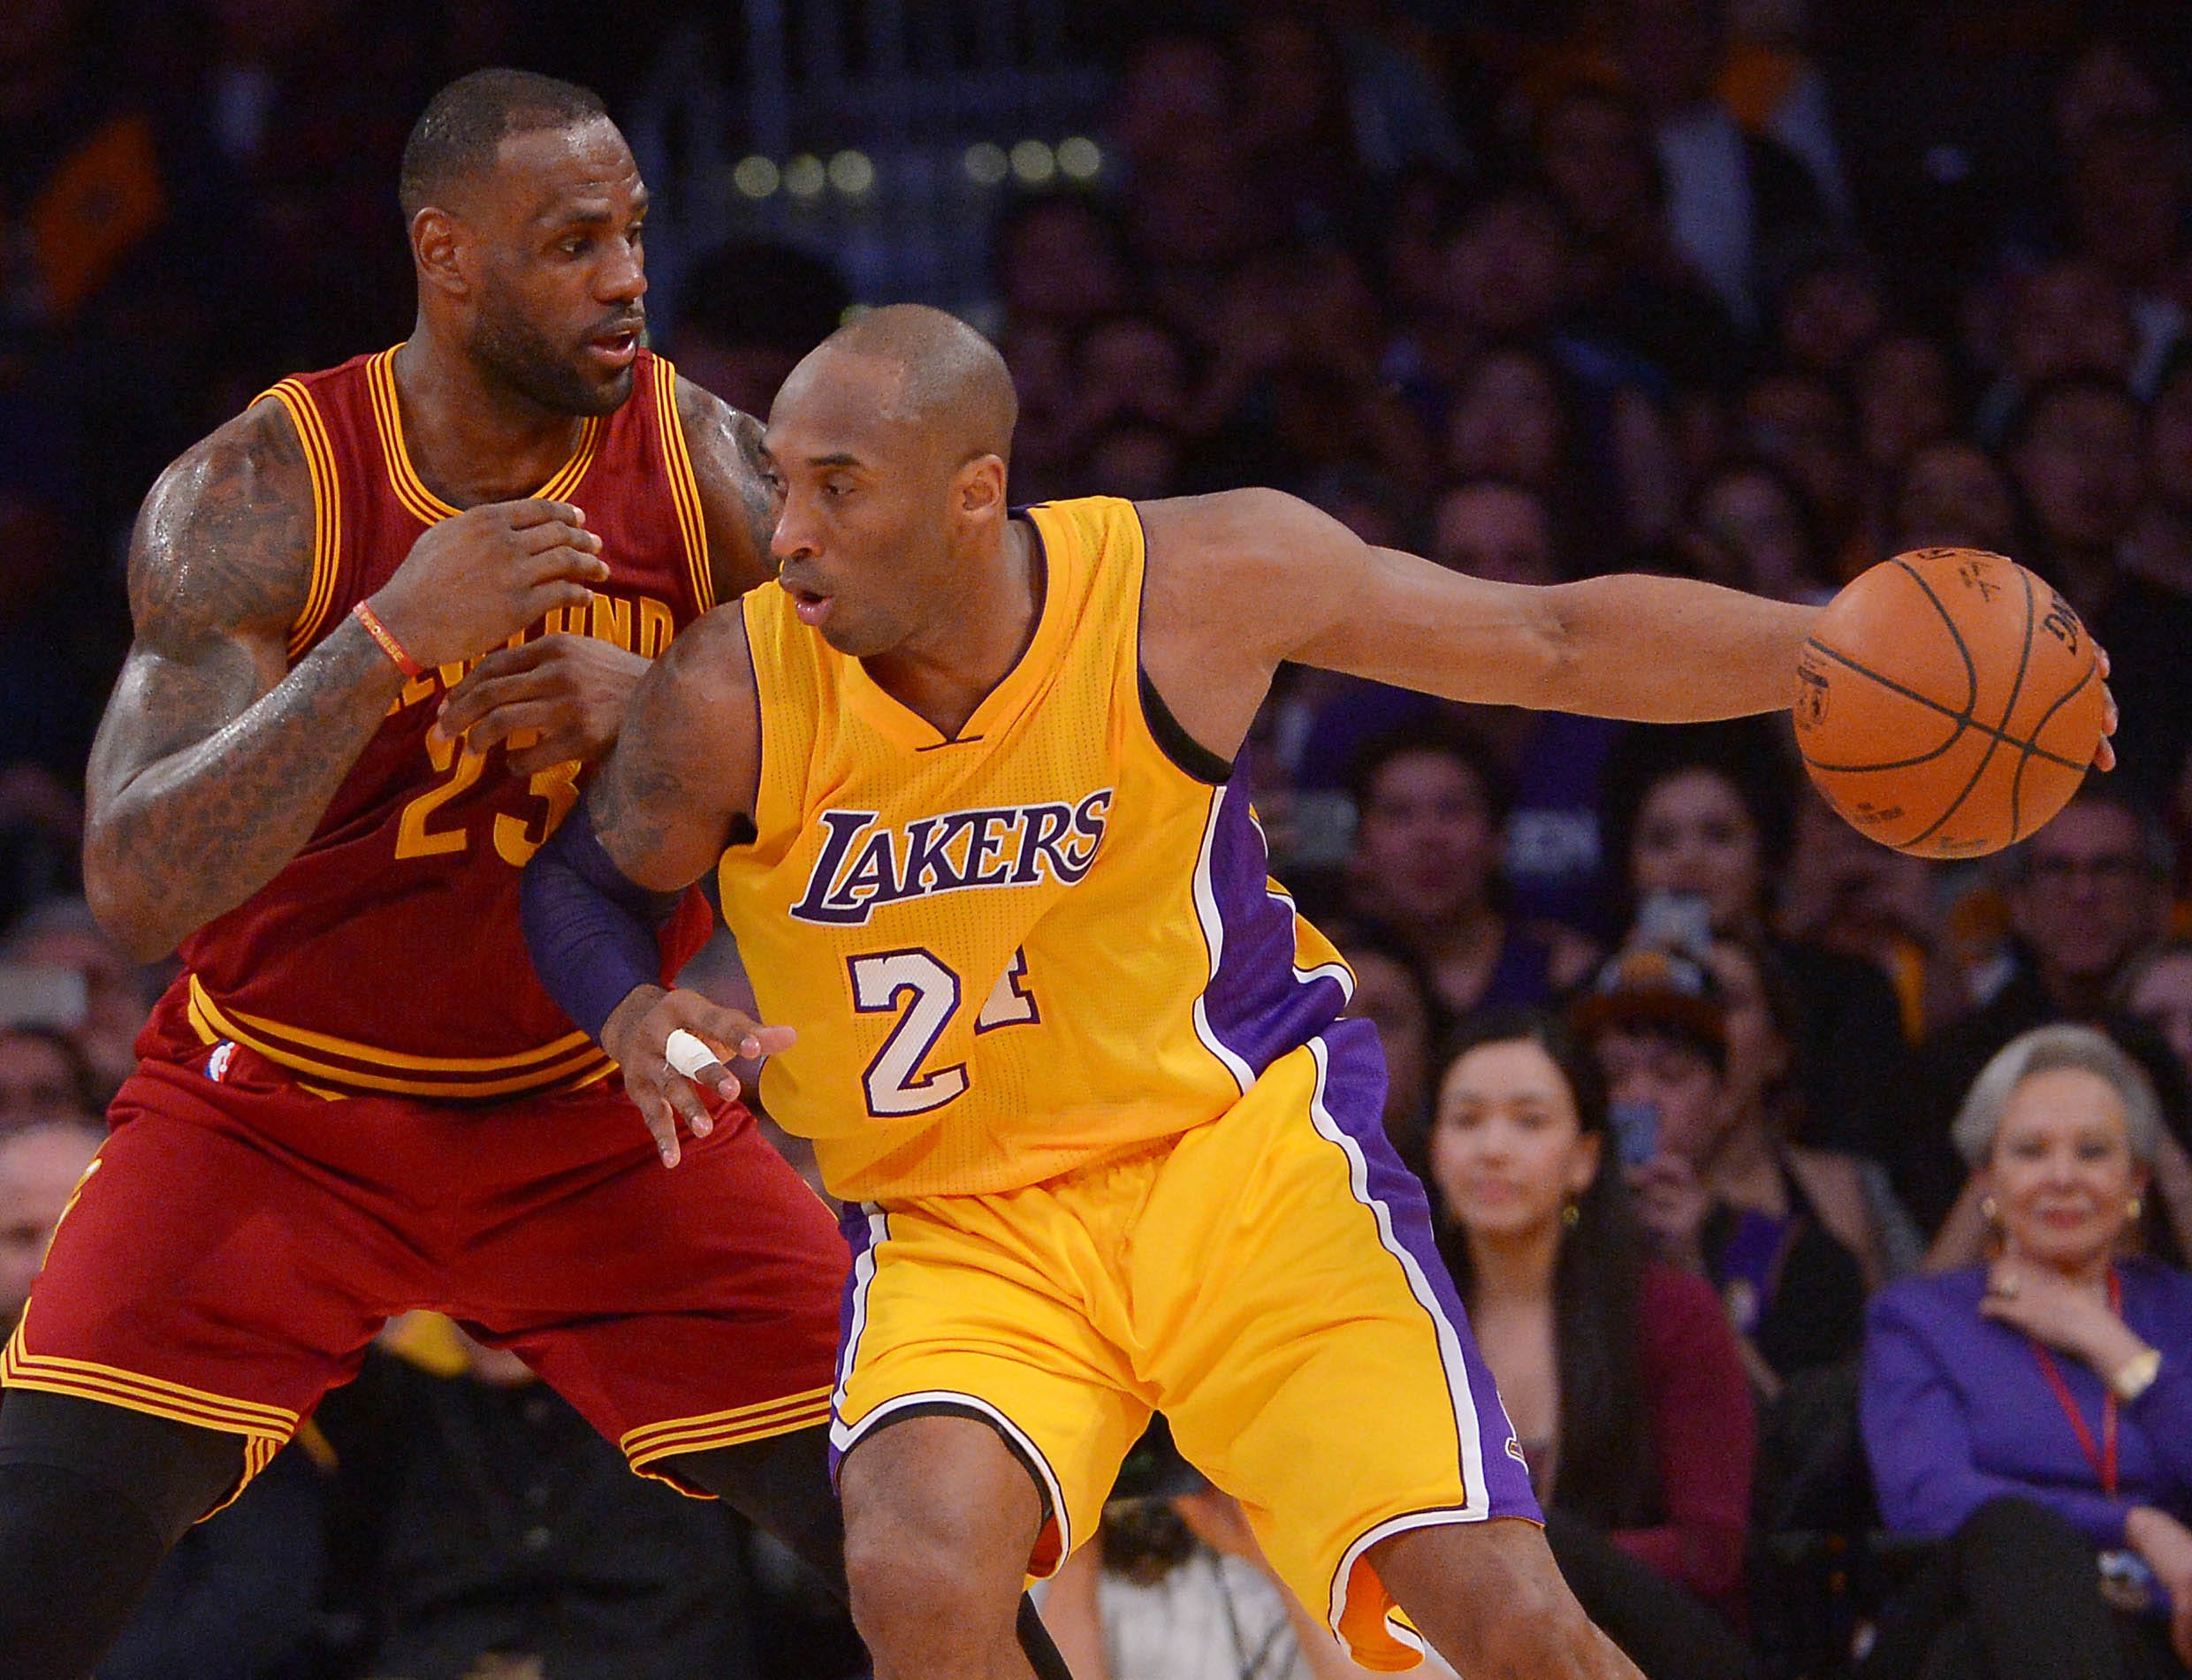 How NBA Stars LeBron James and More Honored Kobe Bryant on Mamba Day